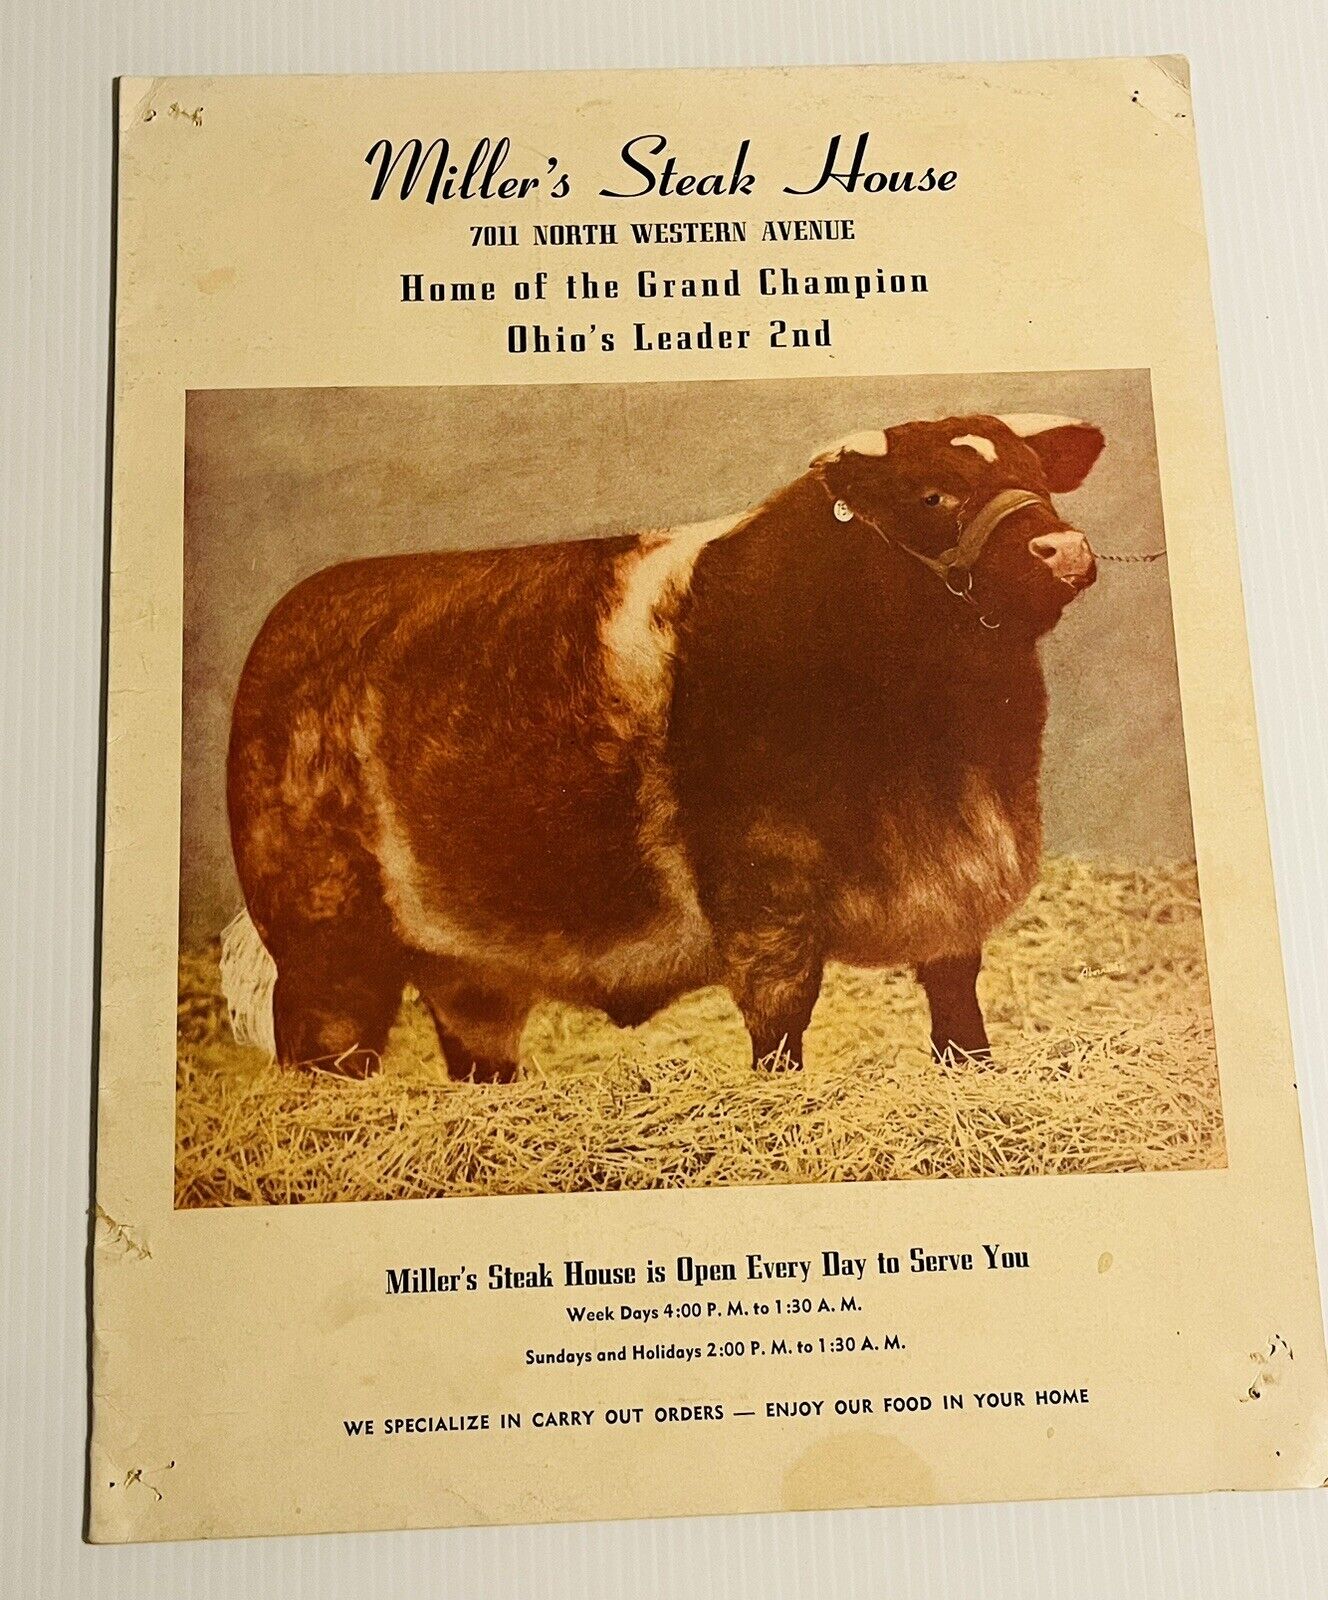 Vintage 50\'s Restaurant Menu Miller\'s Steak House Chicago 7011 North Western Av